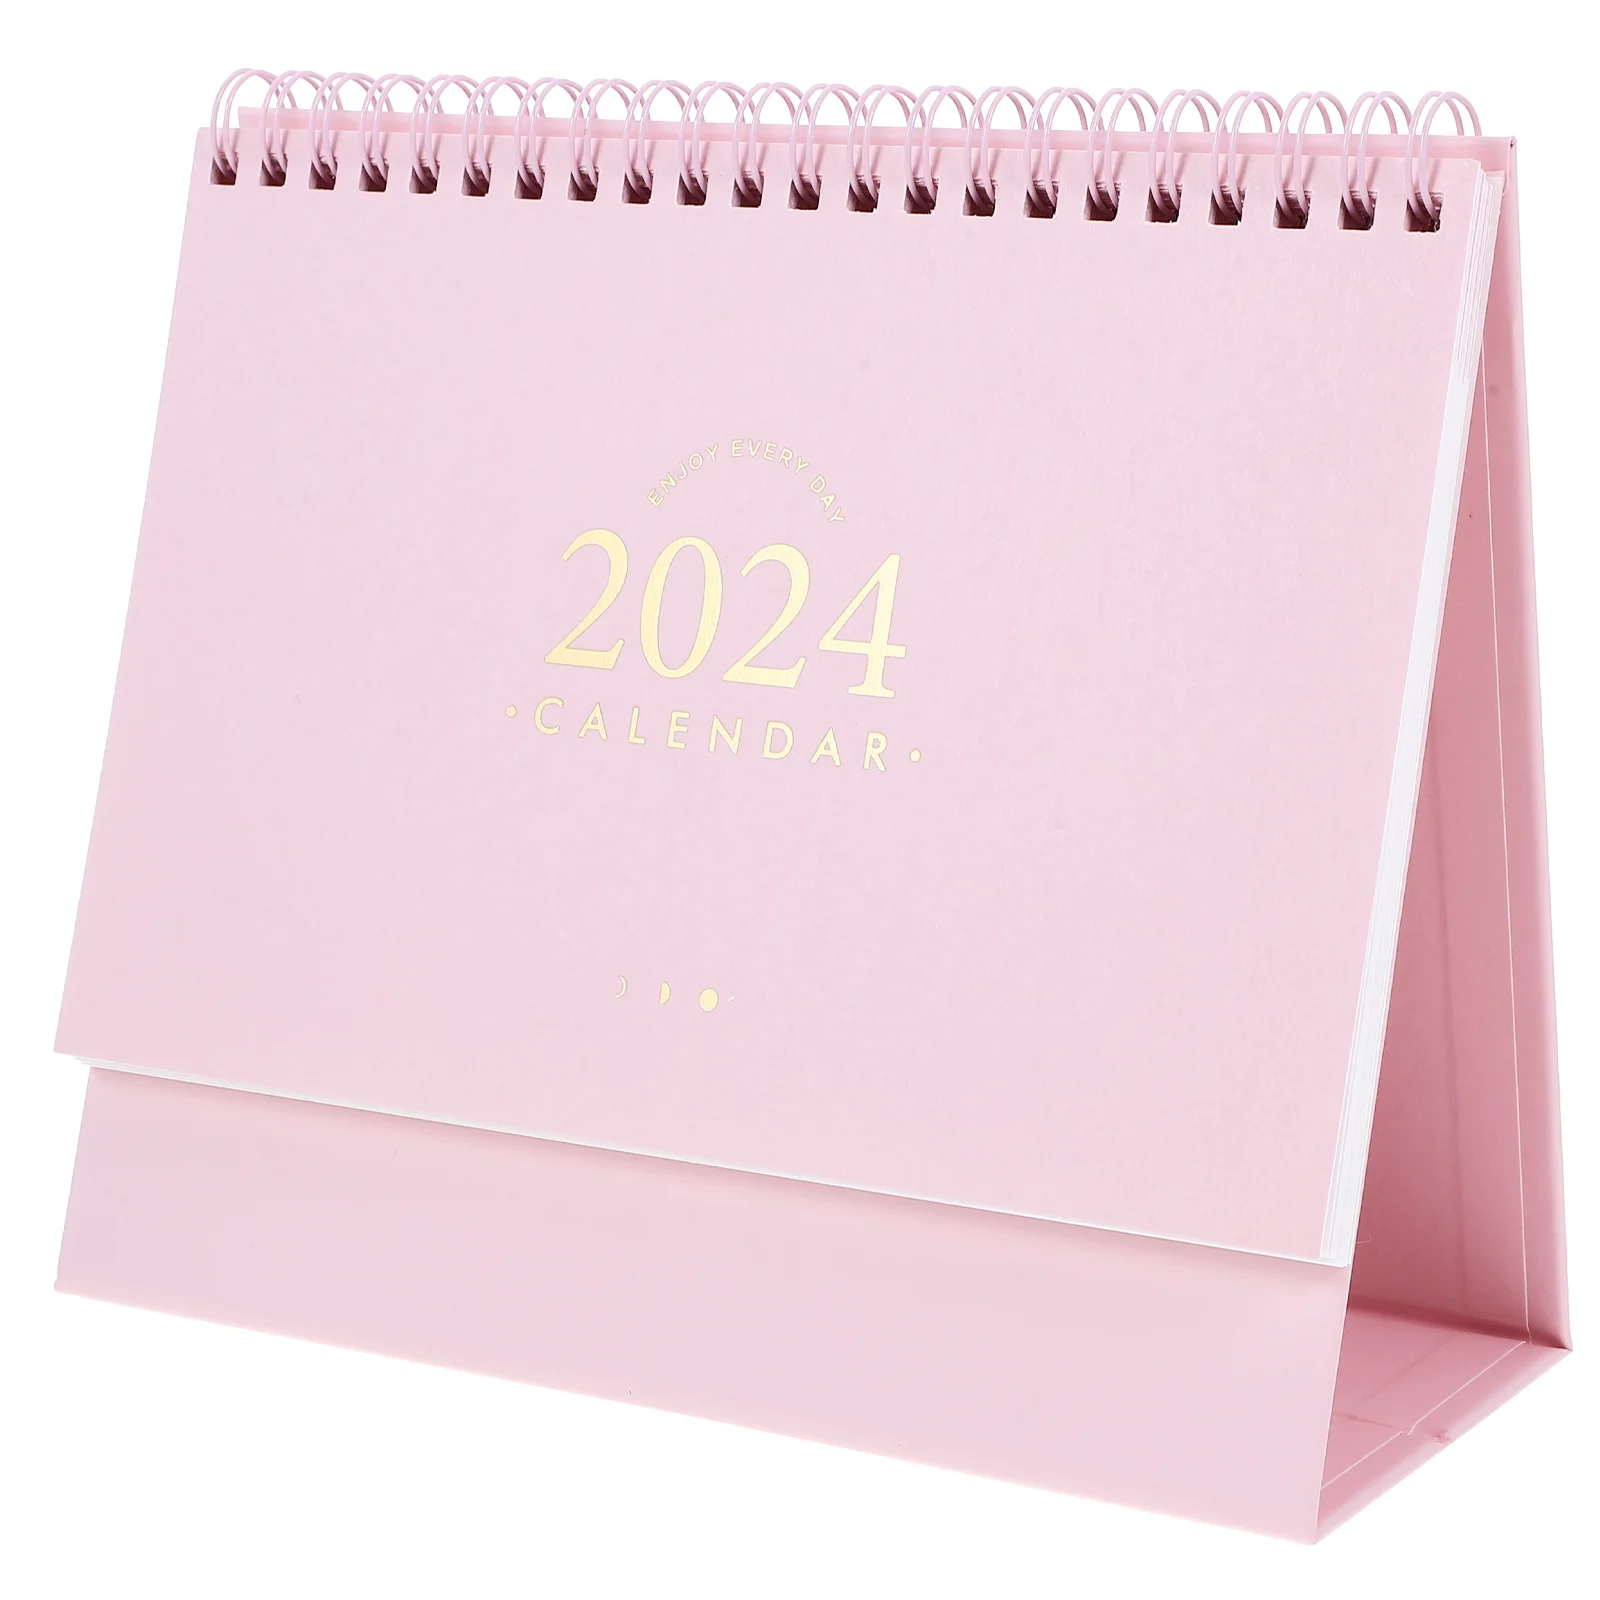 

2024 Desk Calendar Sep Dec Standing Calendar Months Agenda Planner Coil Binding Large Ruled Blocks Home Office Pink